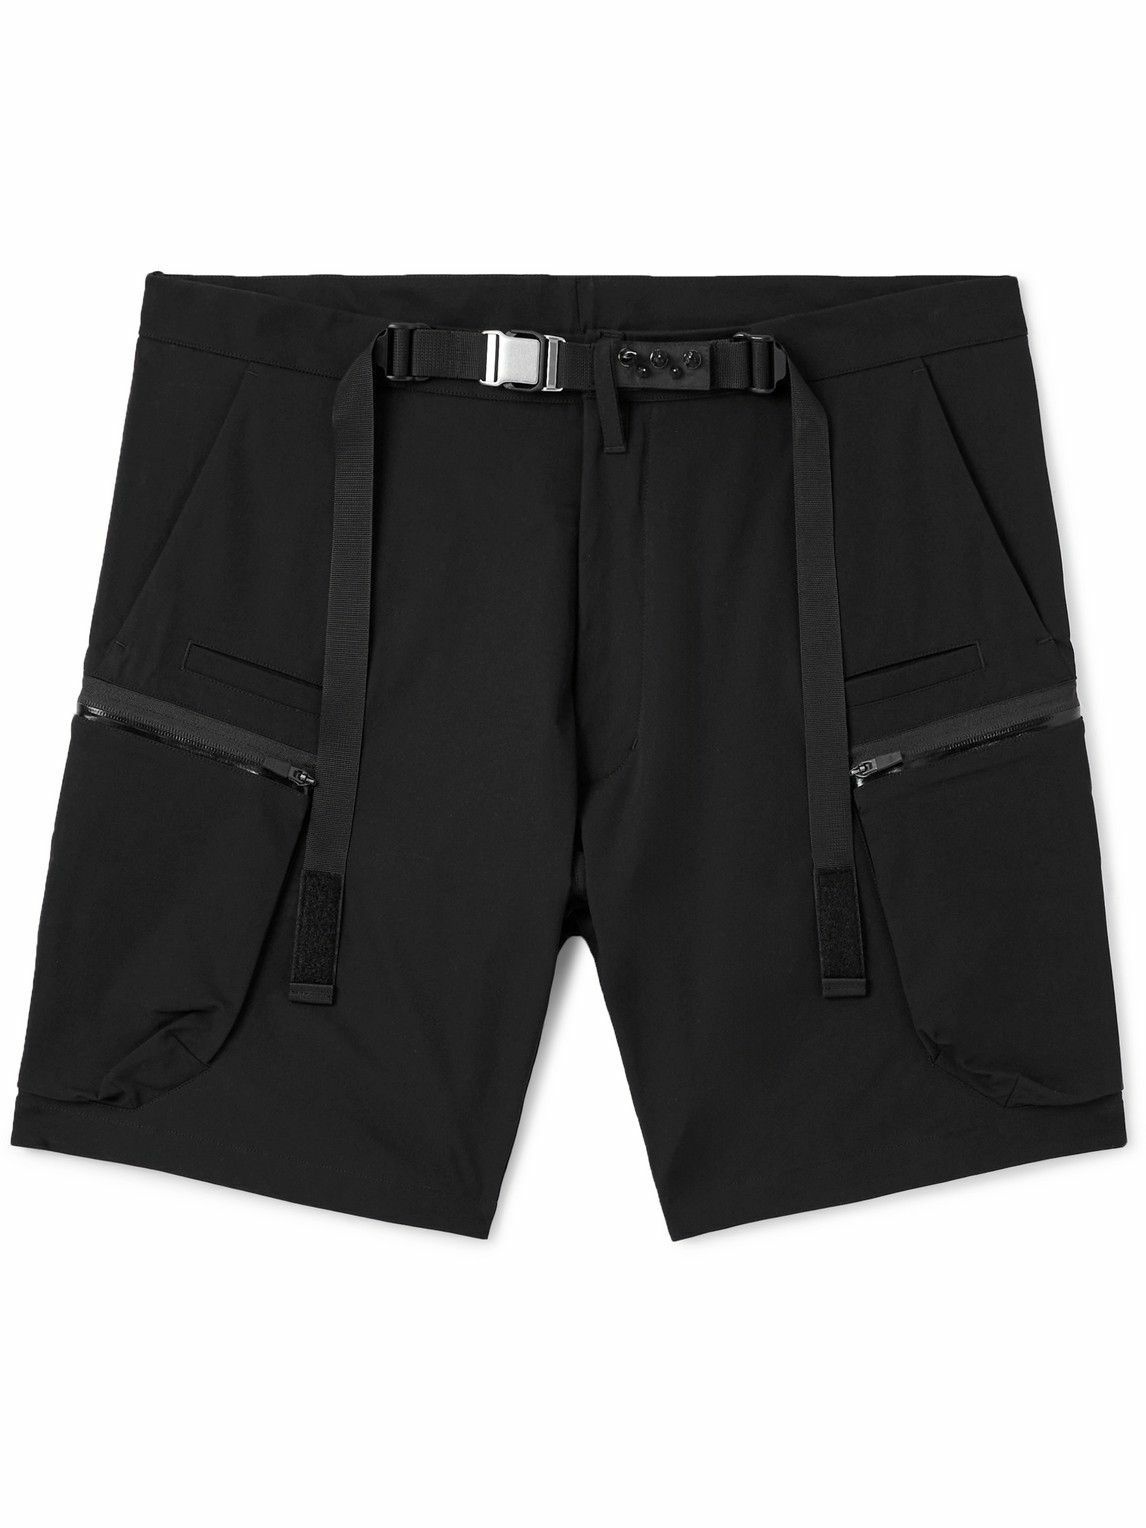 Photo: ACRONYM - SP57-DS Belted Spiked schoeller® 3XDRY® Dryskin™ Cargo Shorts - Black